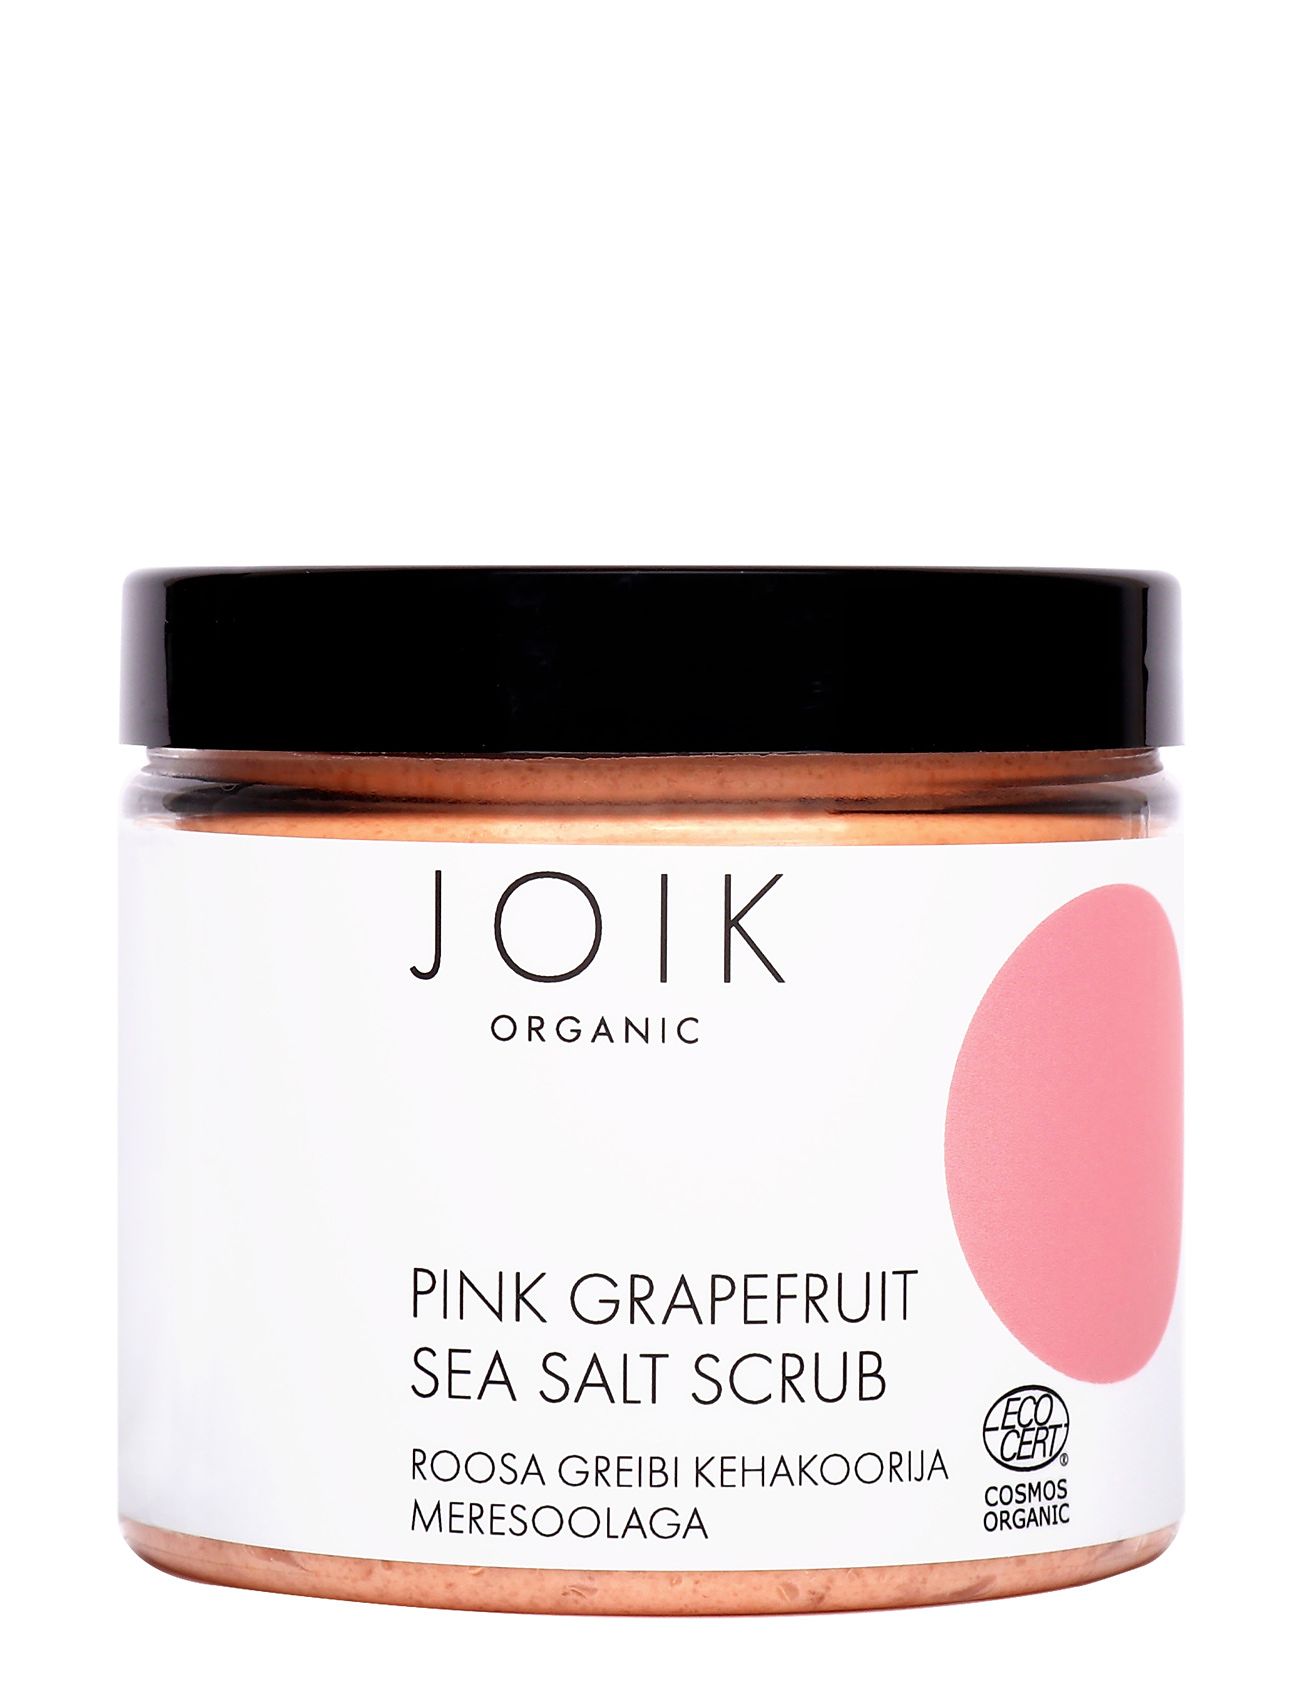 Joik Organic Pink Grapefruit Sea Salt Scrub Beauty Women Skin Care Bath Products Nude JOIK